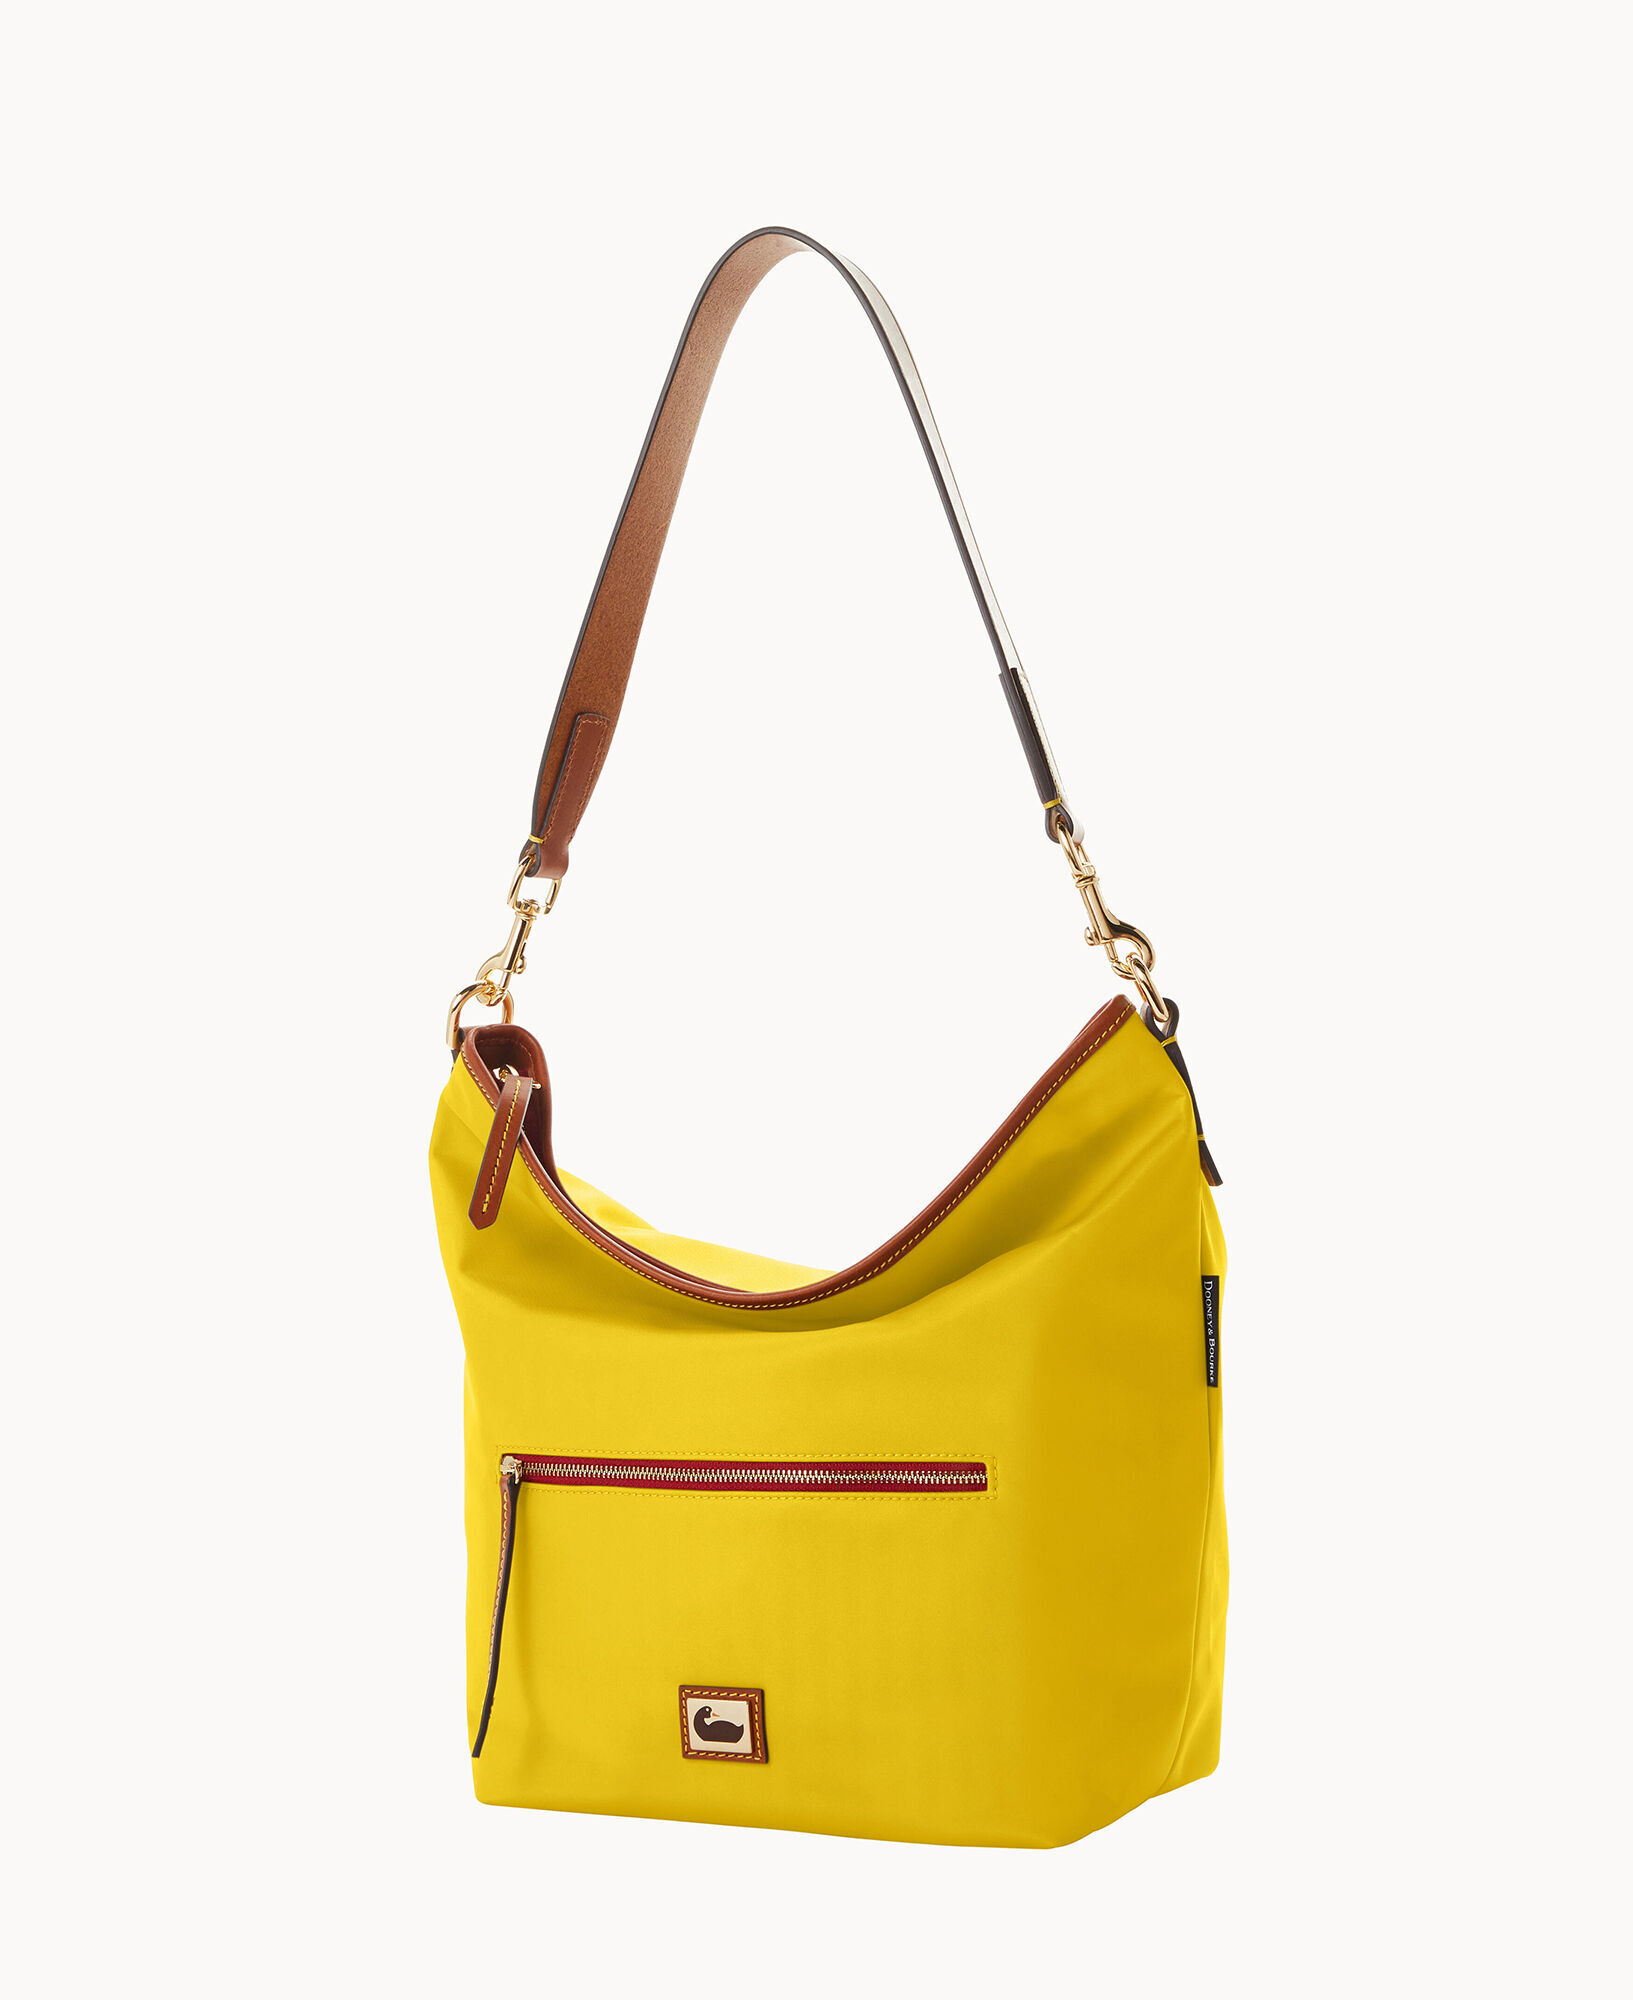 Dooney & Bourke Yellow Nylon Hobo Handbag Purse